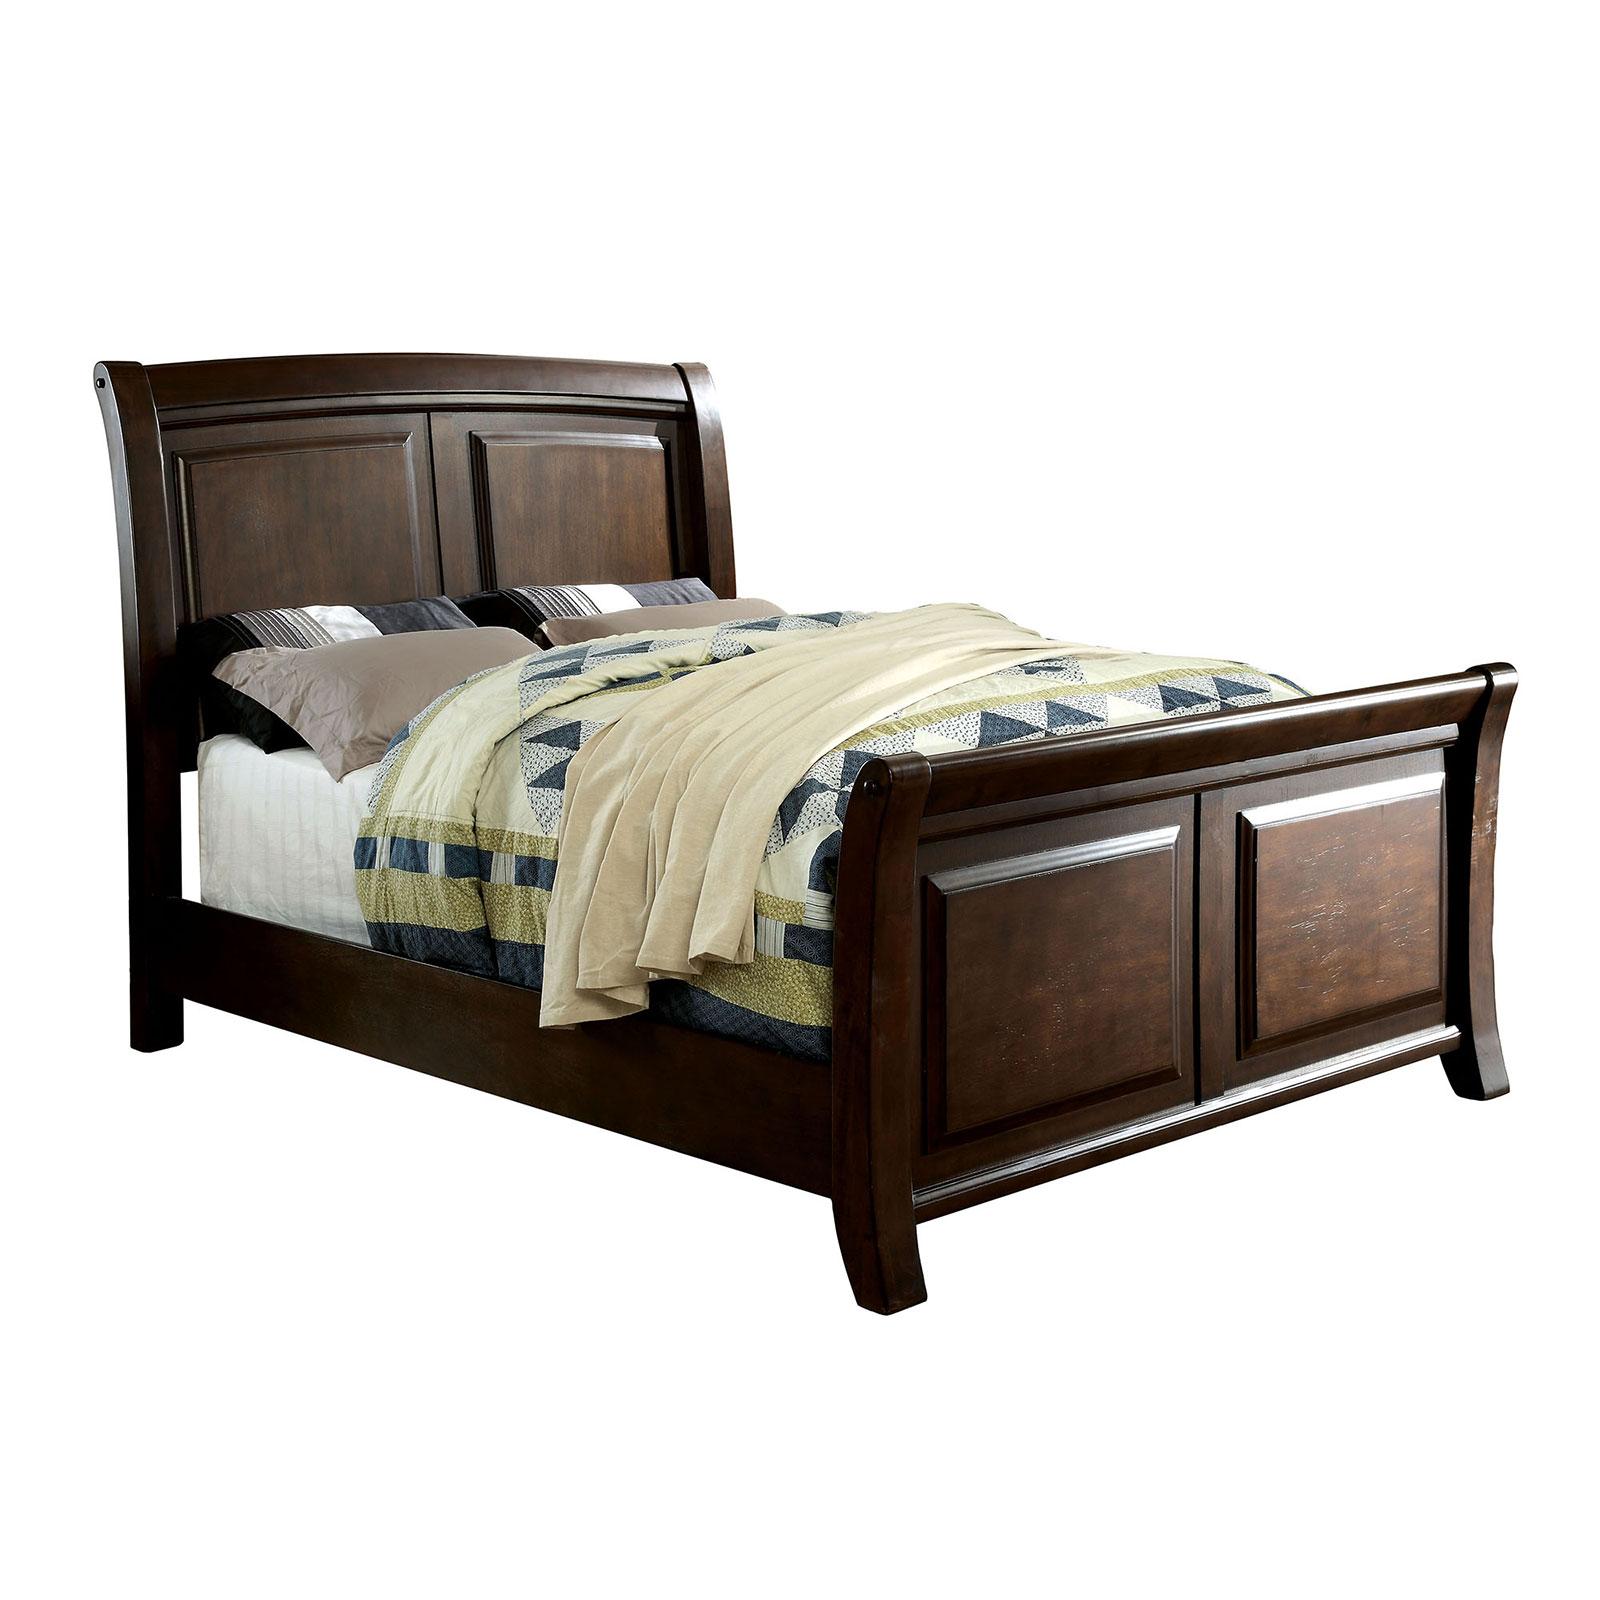 Transitional Sleigh Bed LITCHVILLE CM7383EK CM7383EK-BED in Cherry, Brown Lacquer